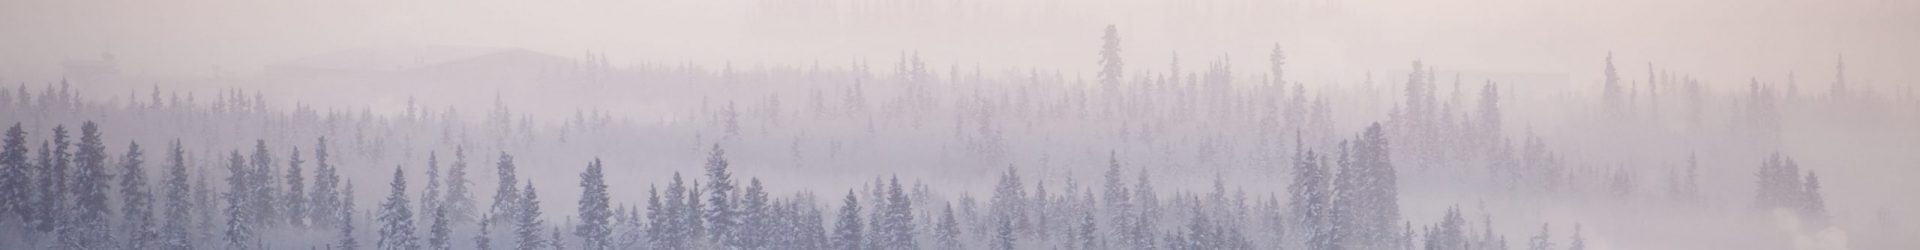 Fairbanks Winter Air Study